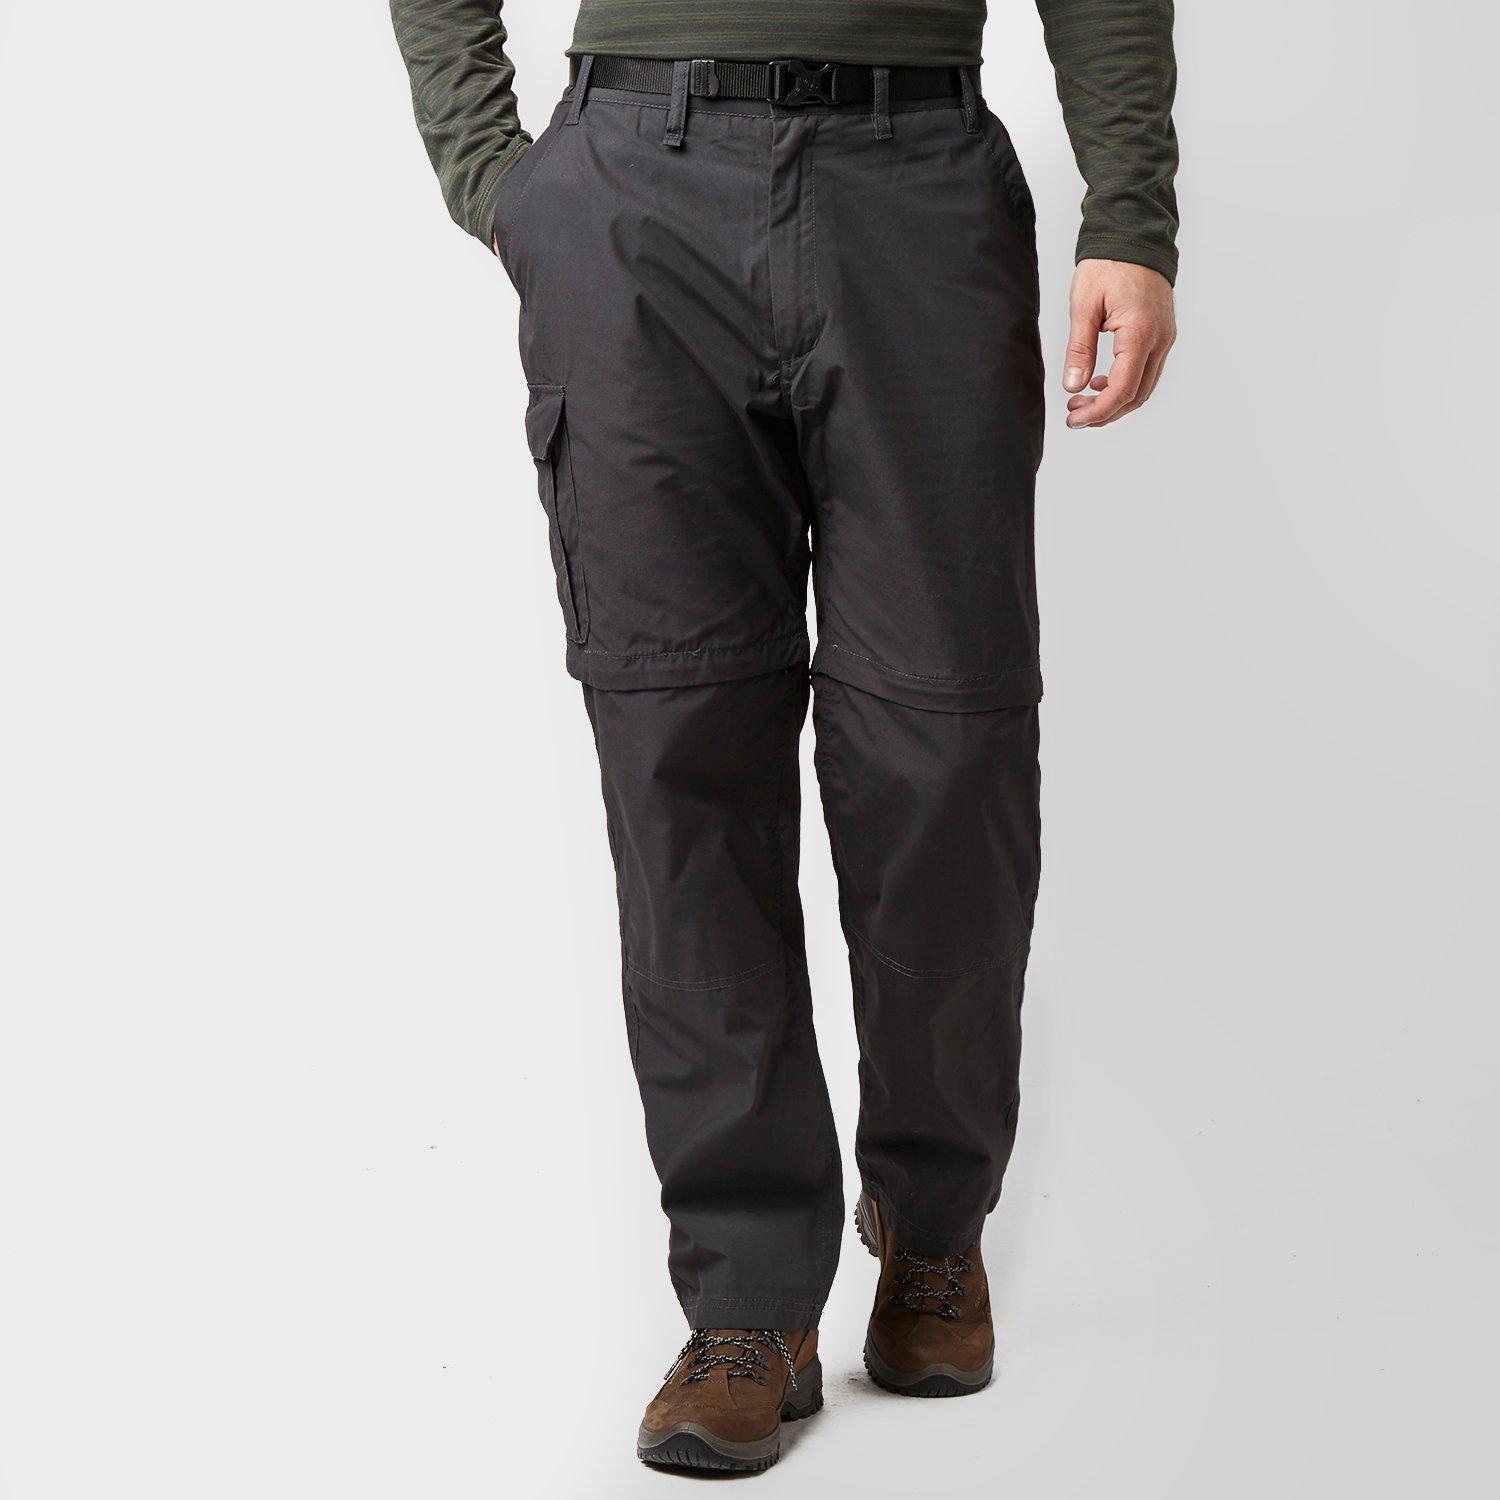 craghoppers men's kiwi zip off trousers - grey, grey